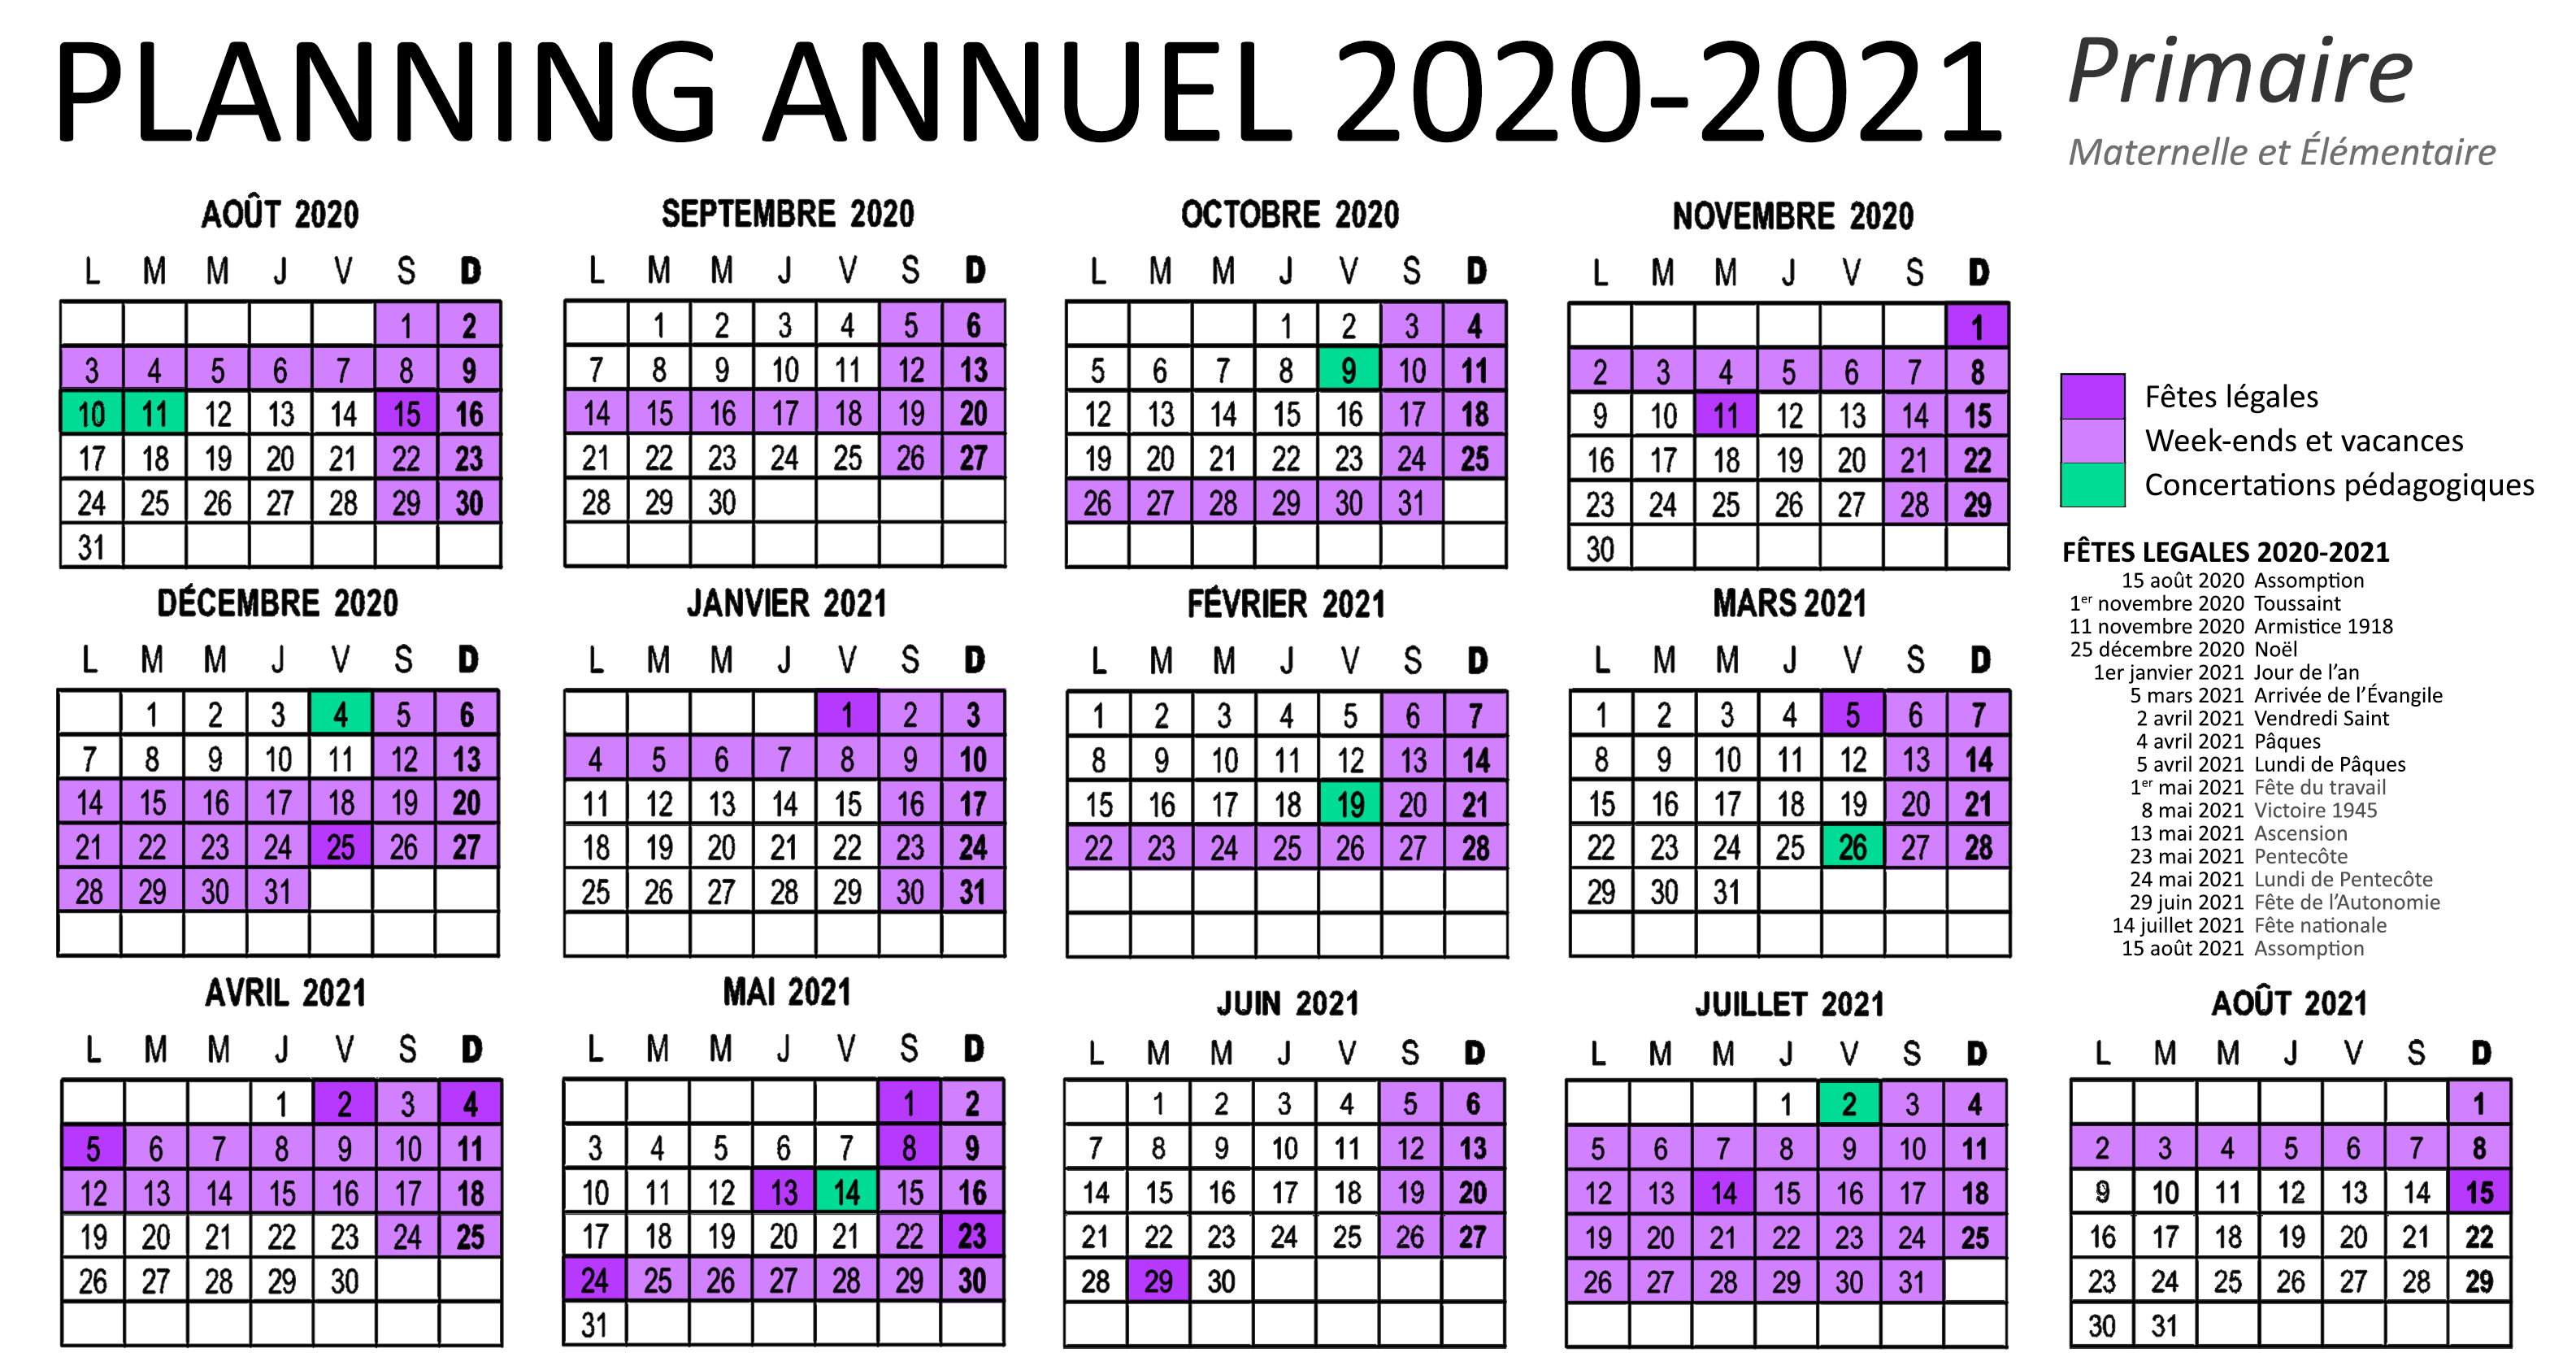 Planning annuel Primaire